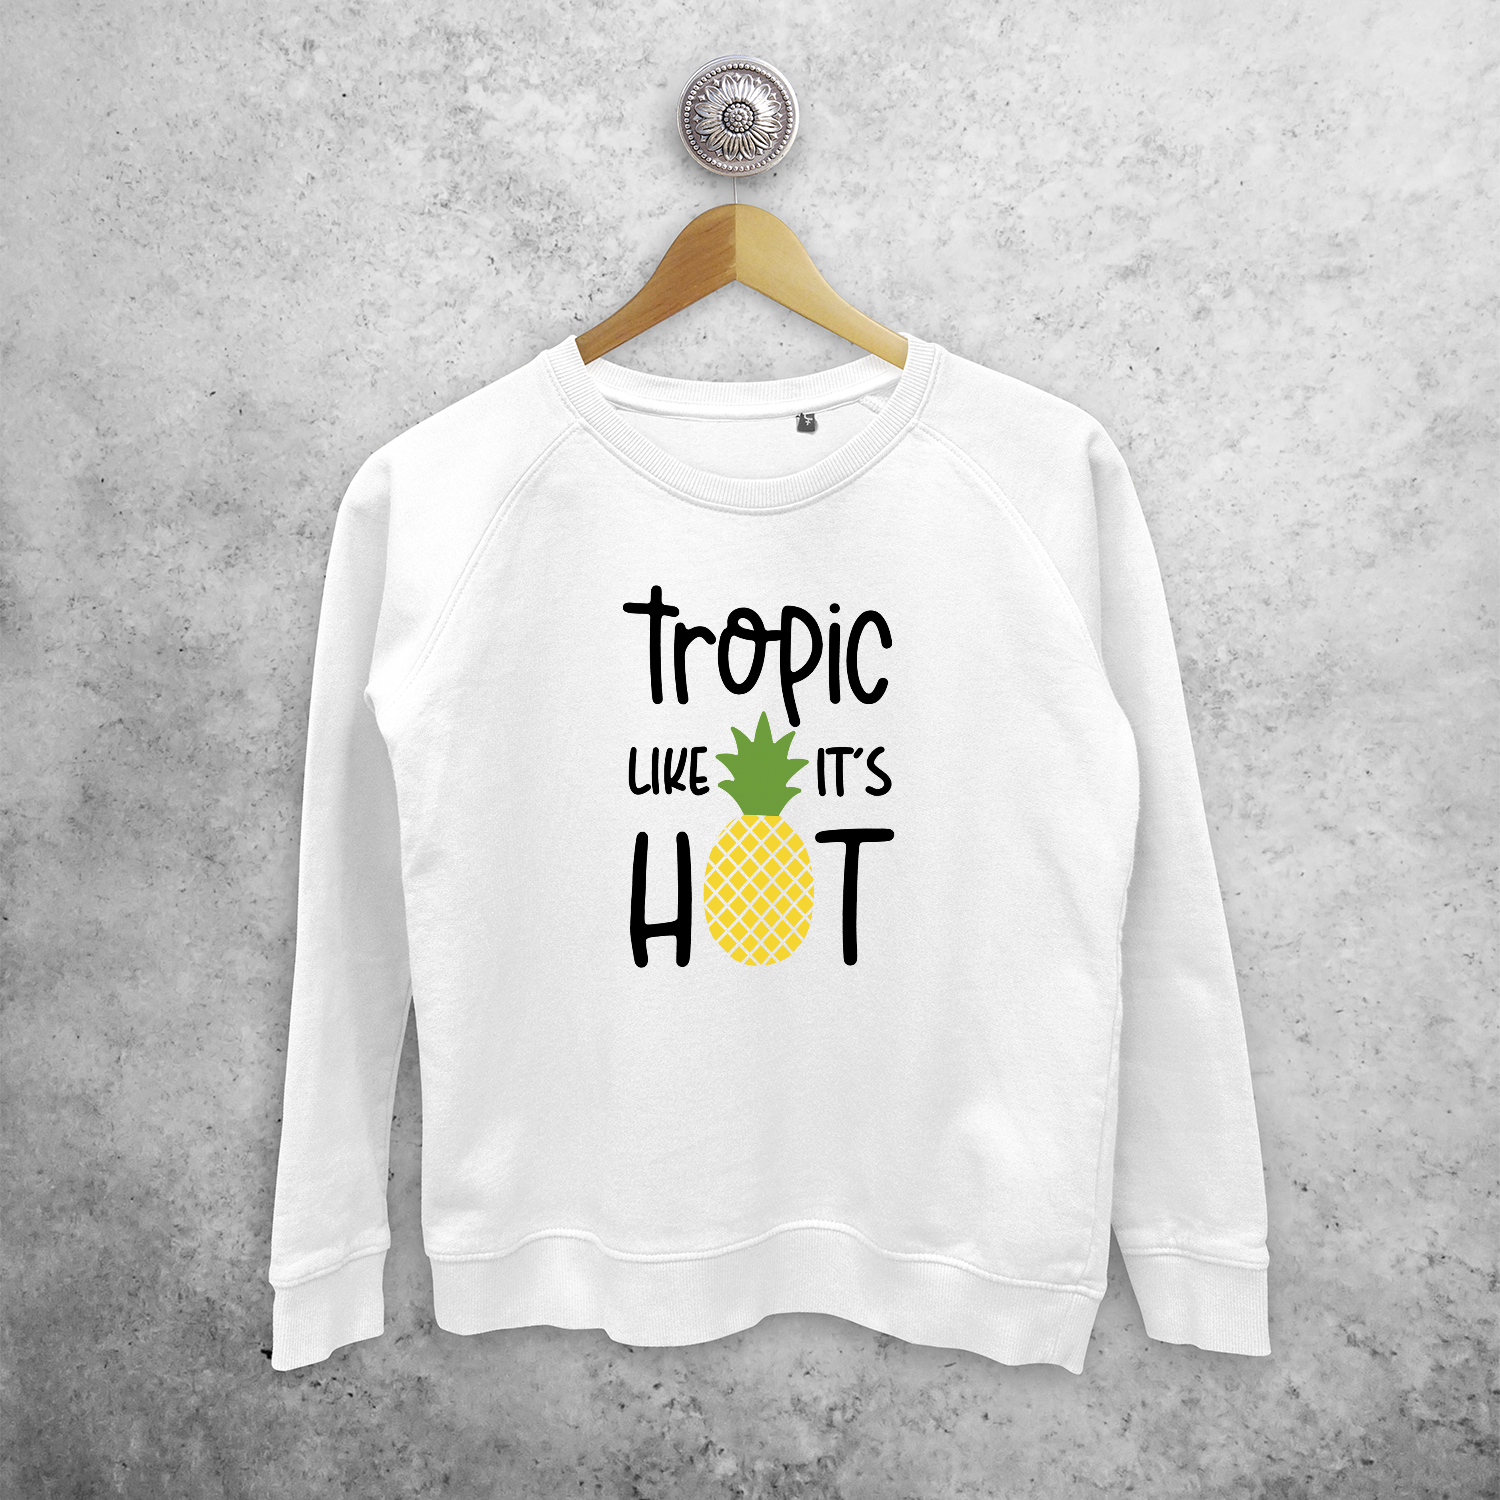 'Tropic like it's hot' sweater